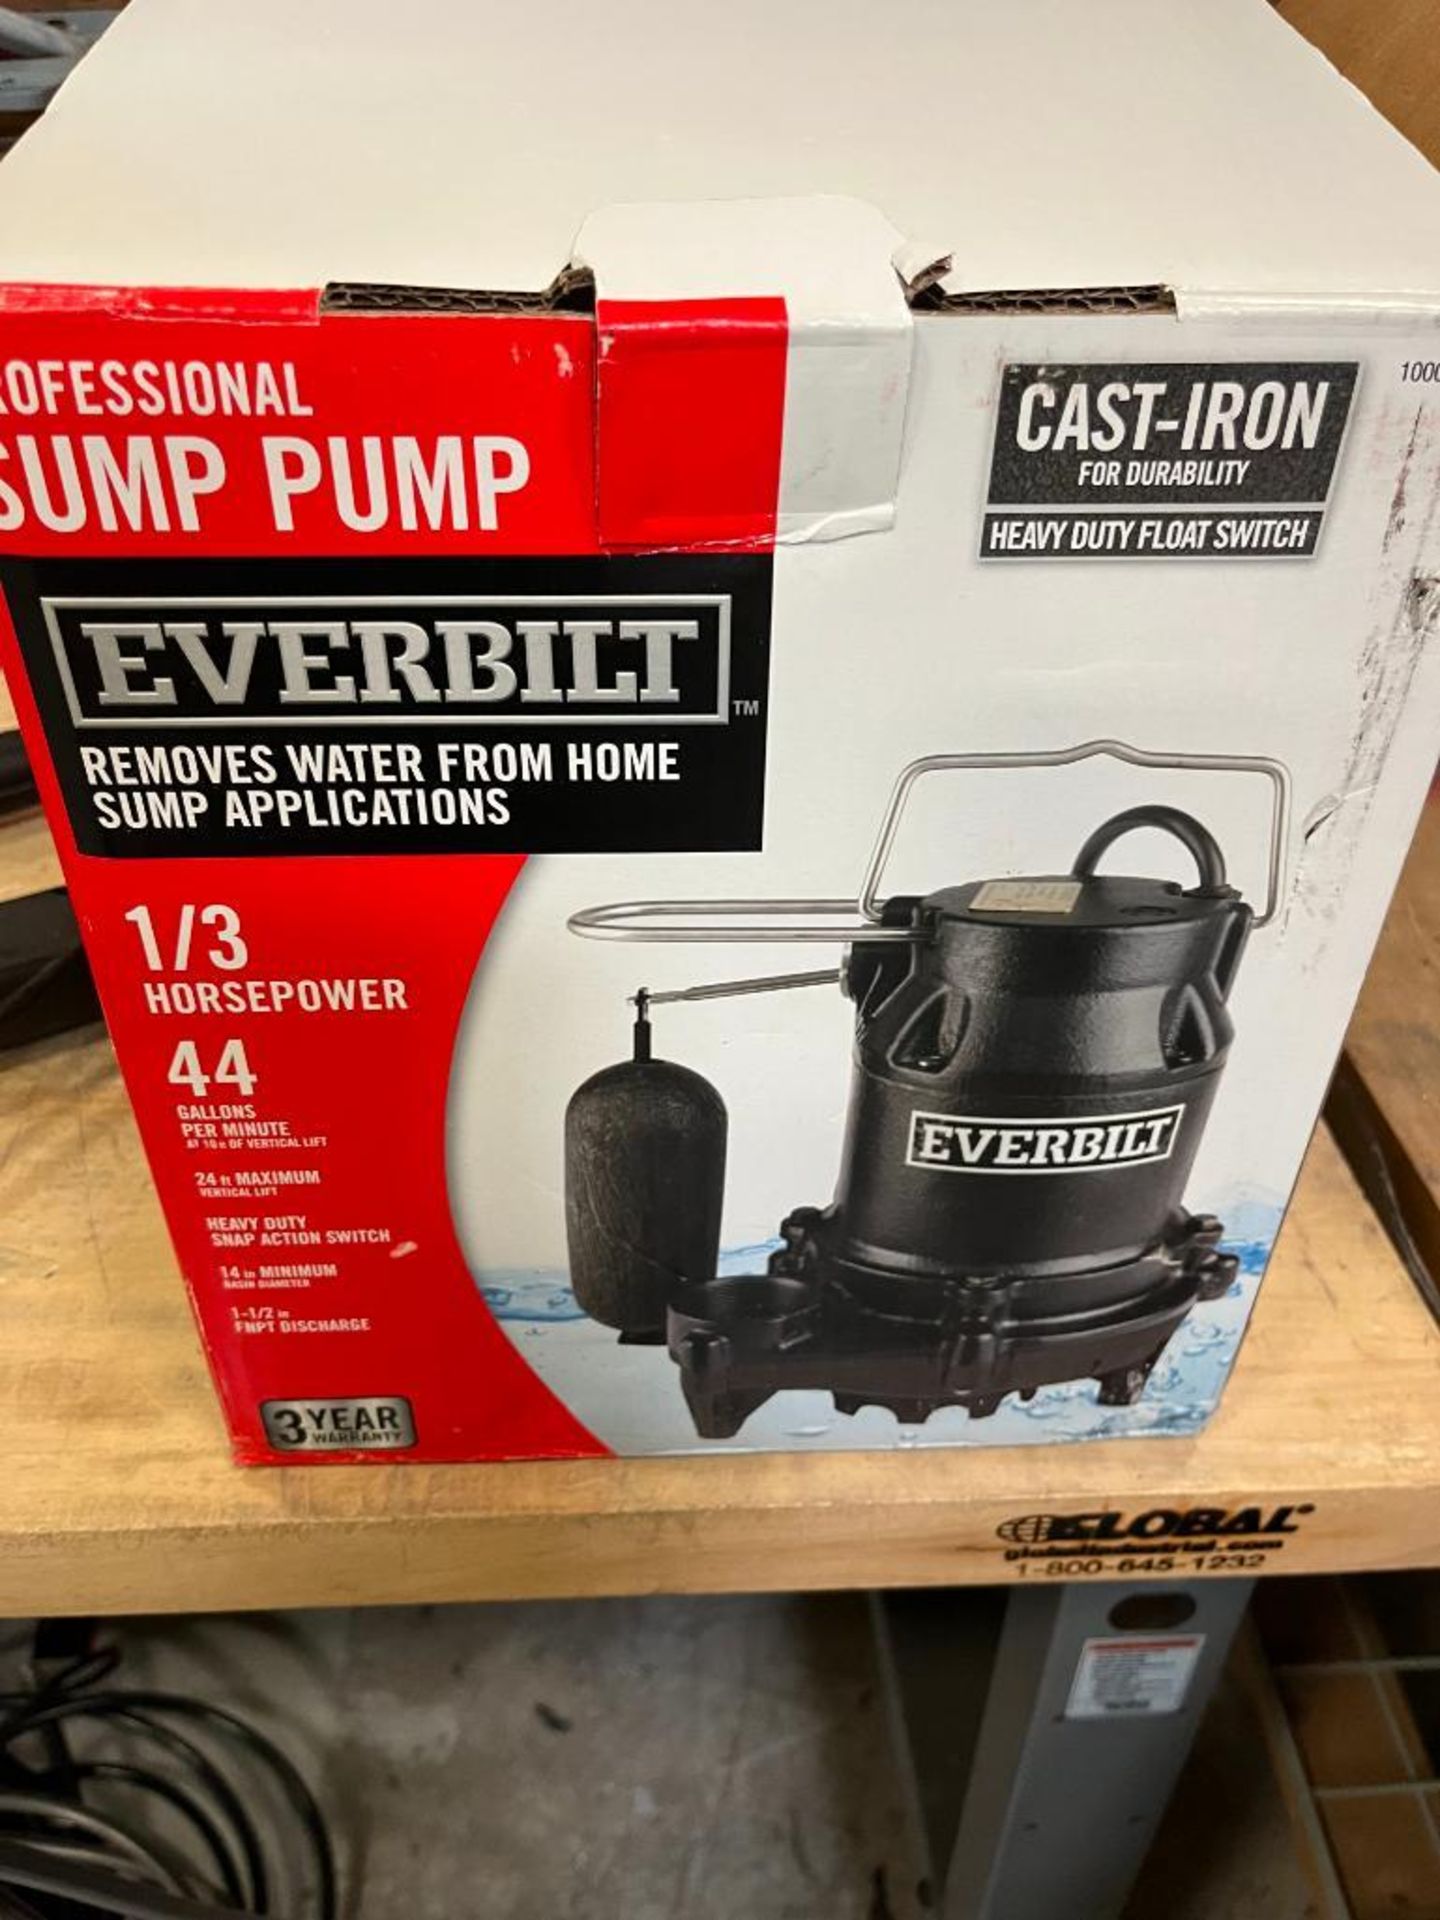 (New) Everbilt Professional Sump Pump, 1/3 HP, 44 GPM, 1-1/2" Discharge